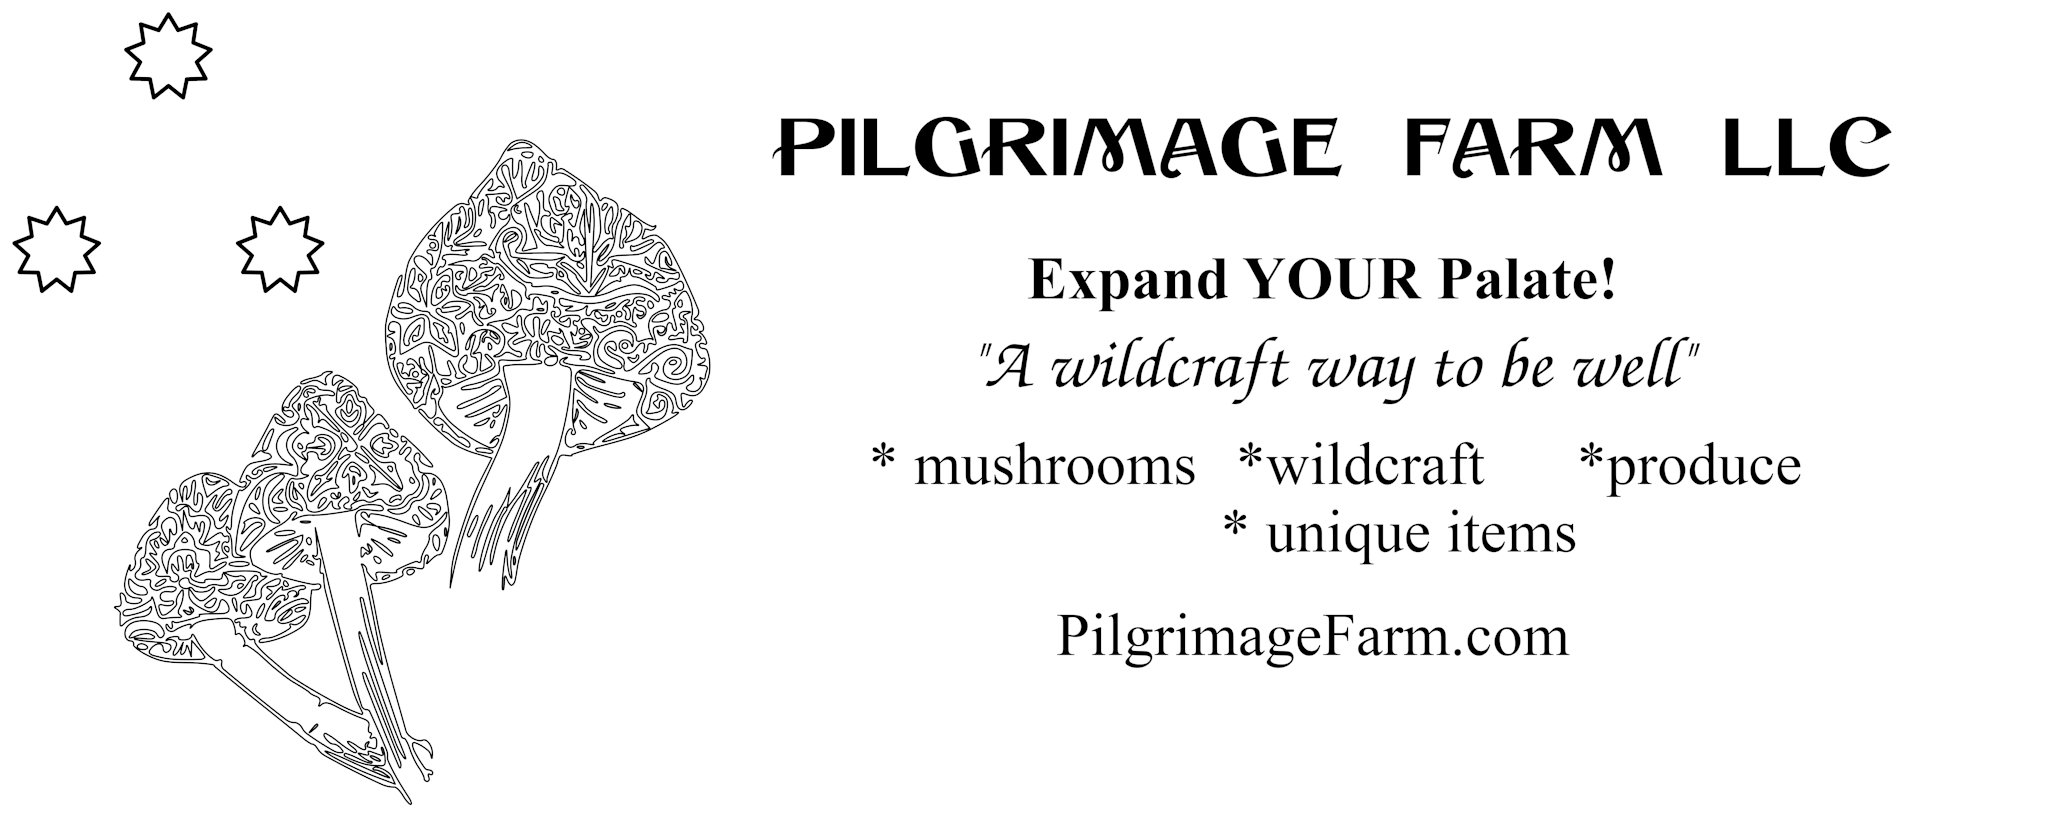 Pilgrimage Farm LLC's banner